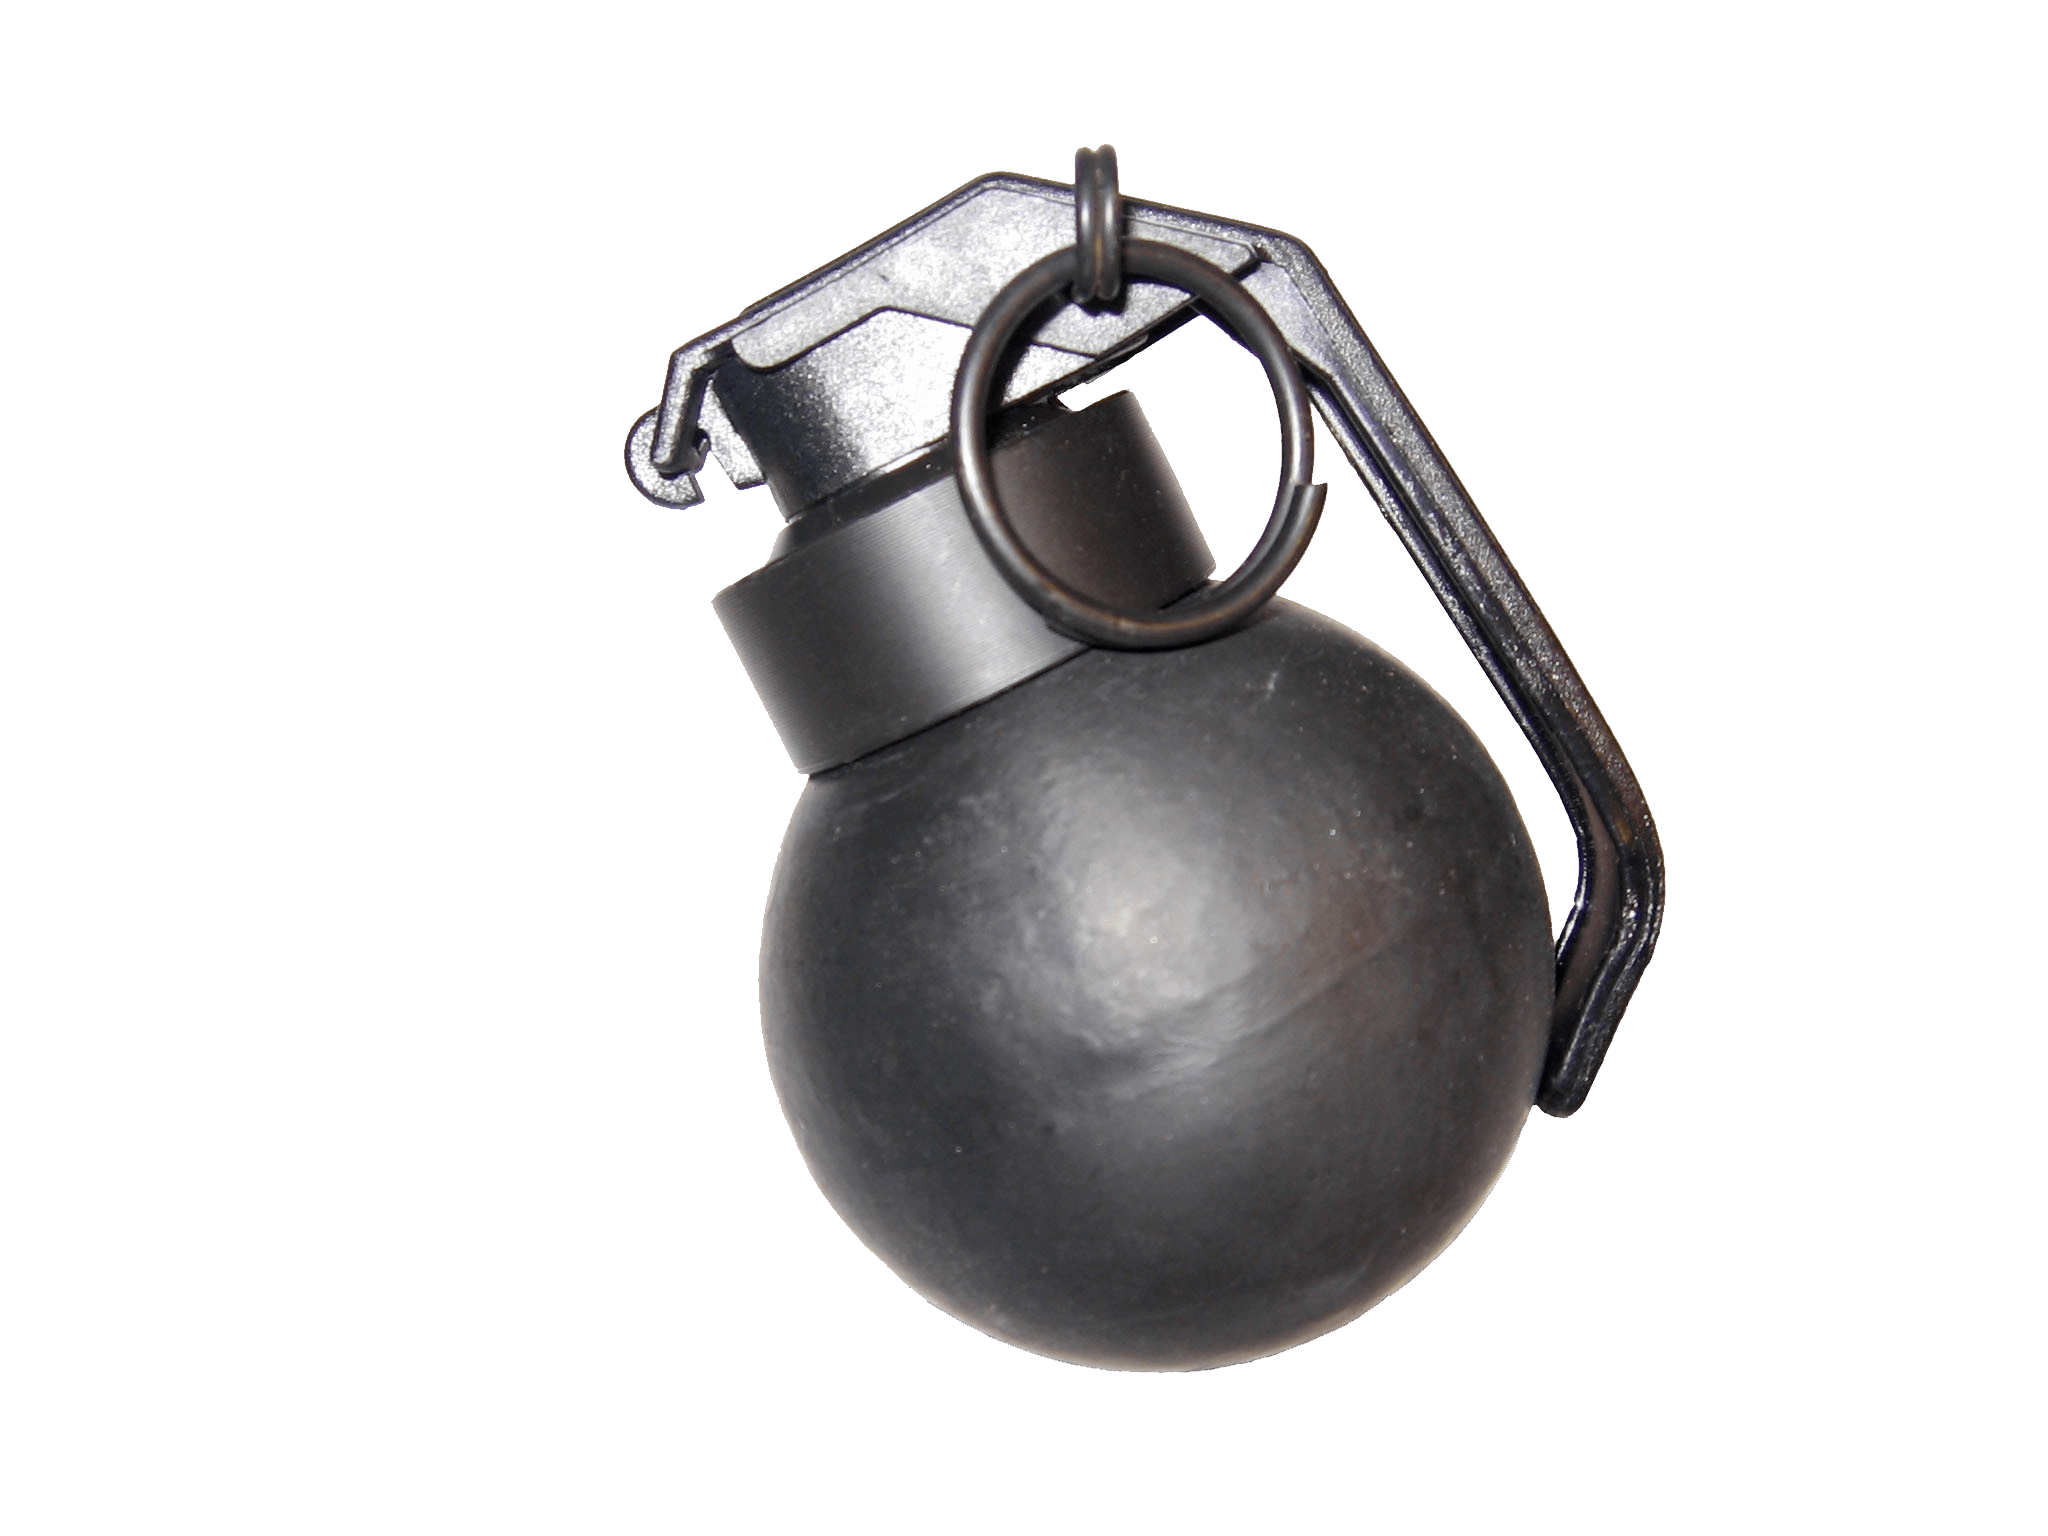 Grenade Photos Download Free Image PNG Image